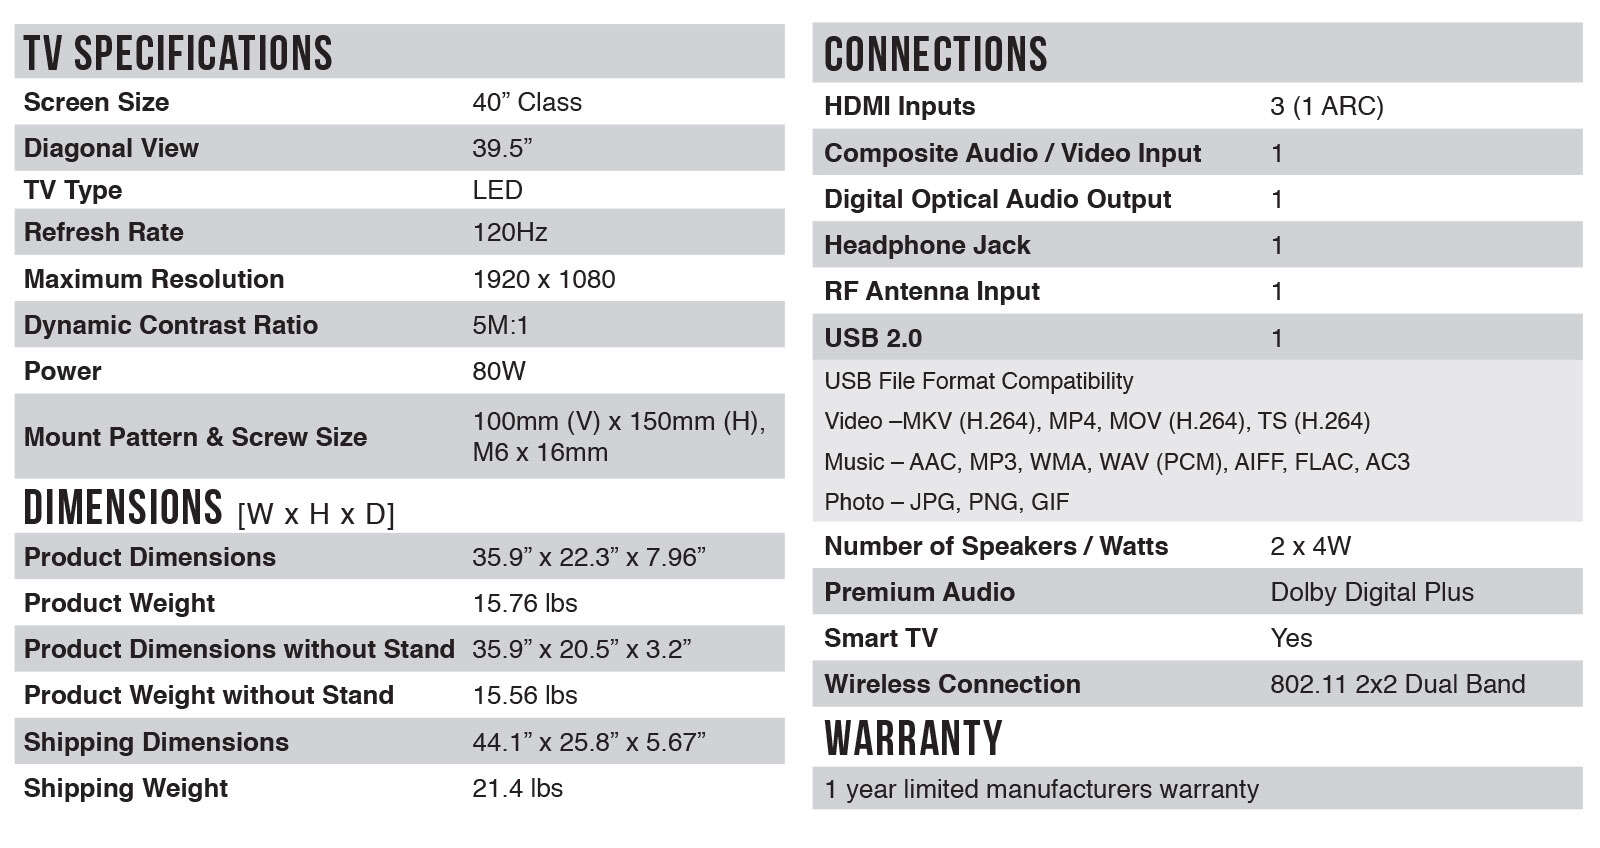 TCL 40” Class S-Series LED HDTV - S3850